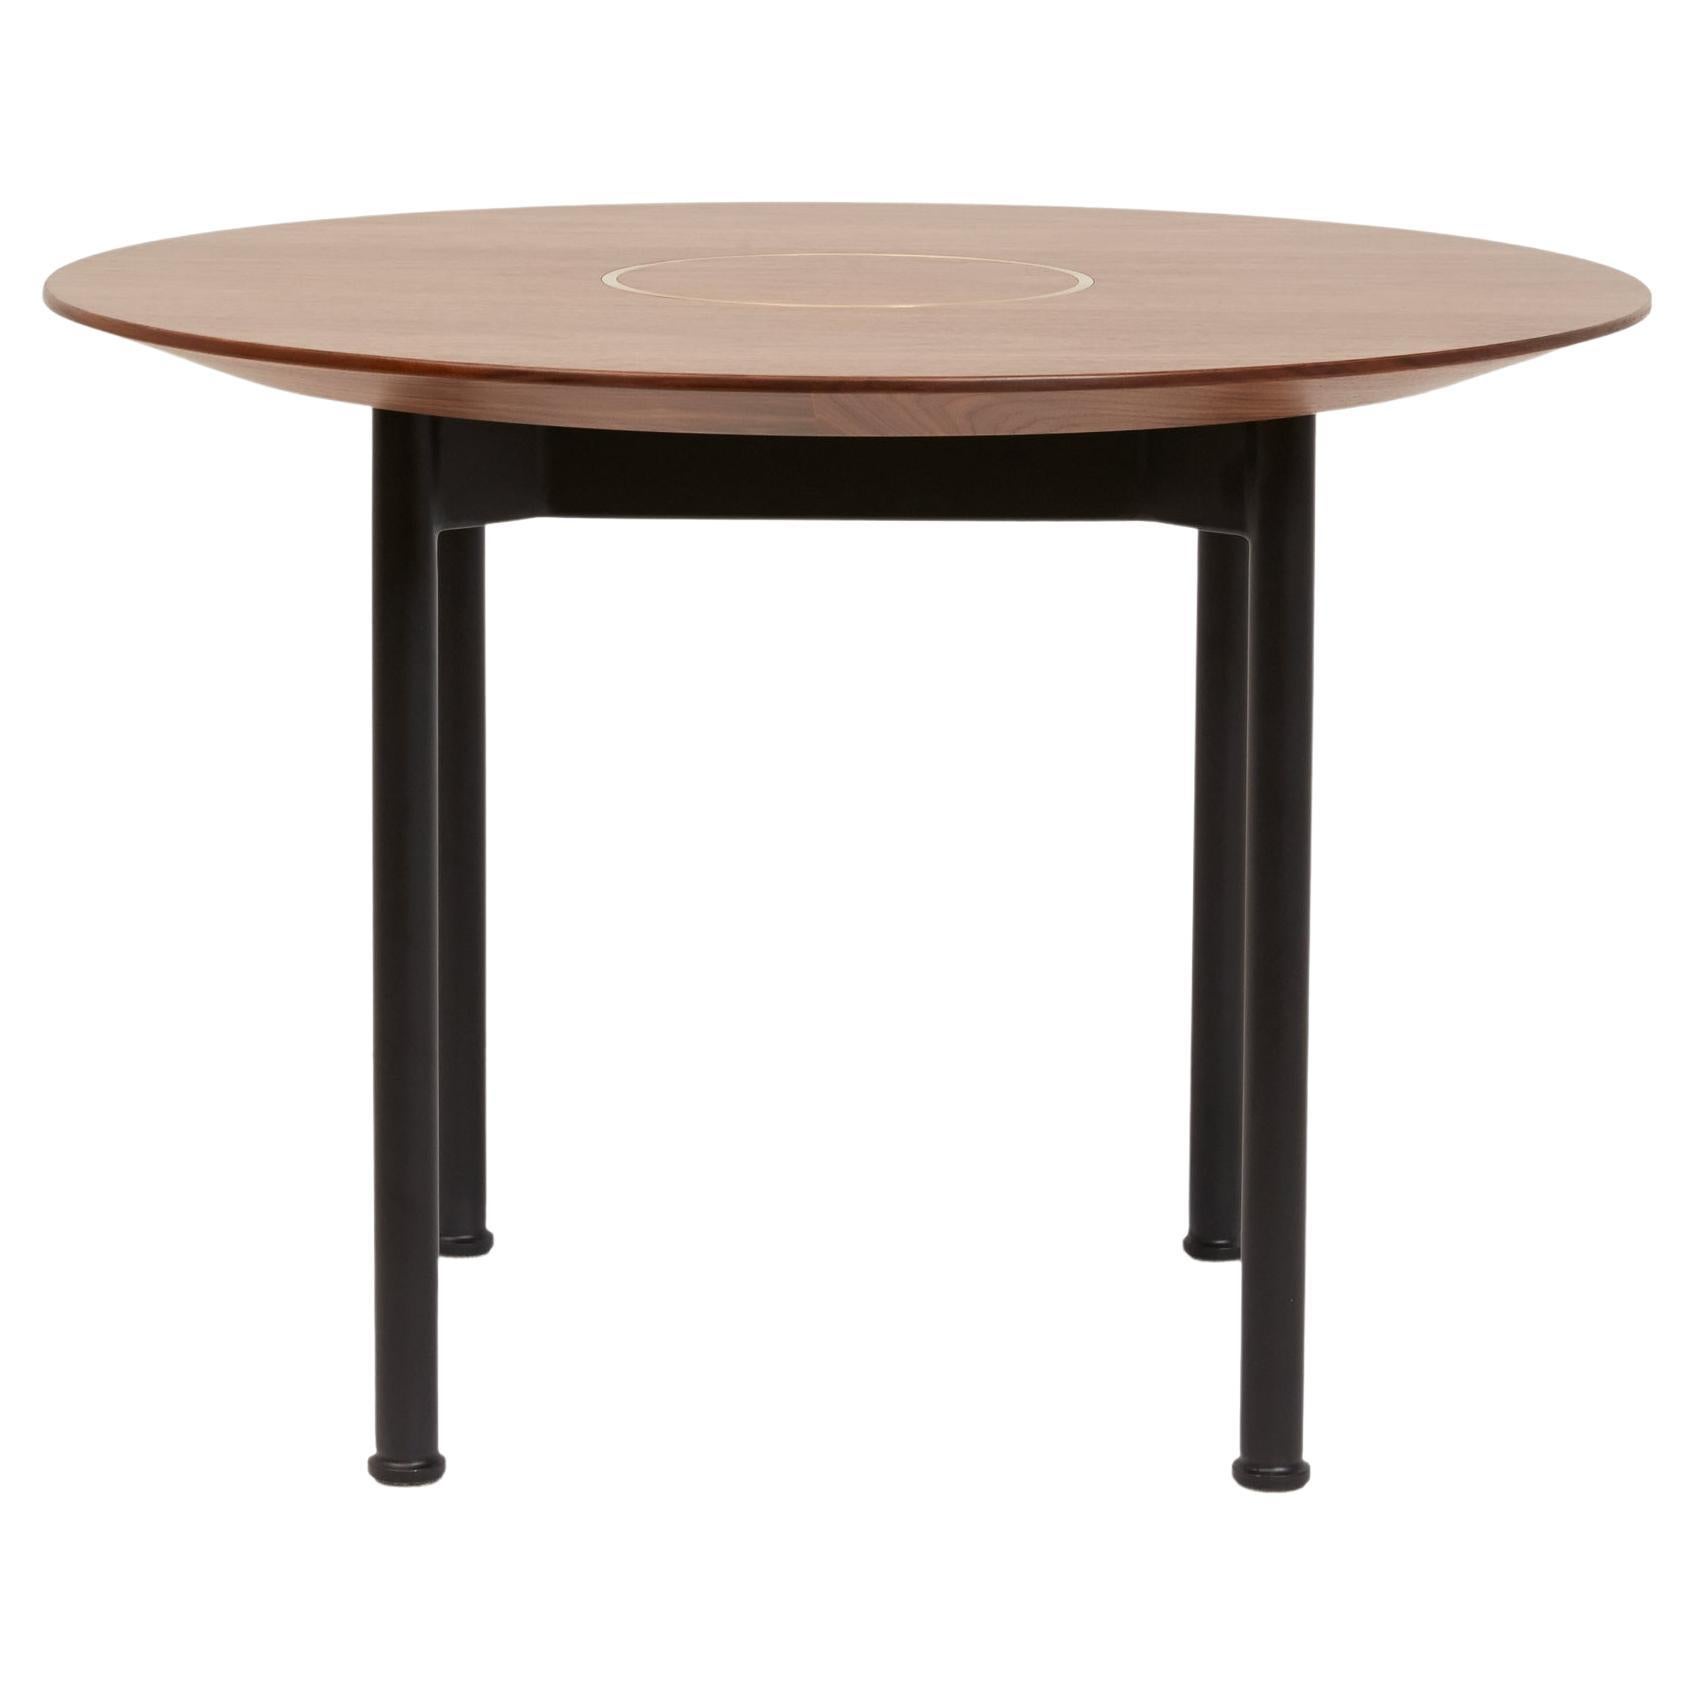 Walnut Coffee Table with Steel Legs, Crawford C650